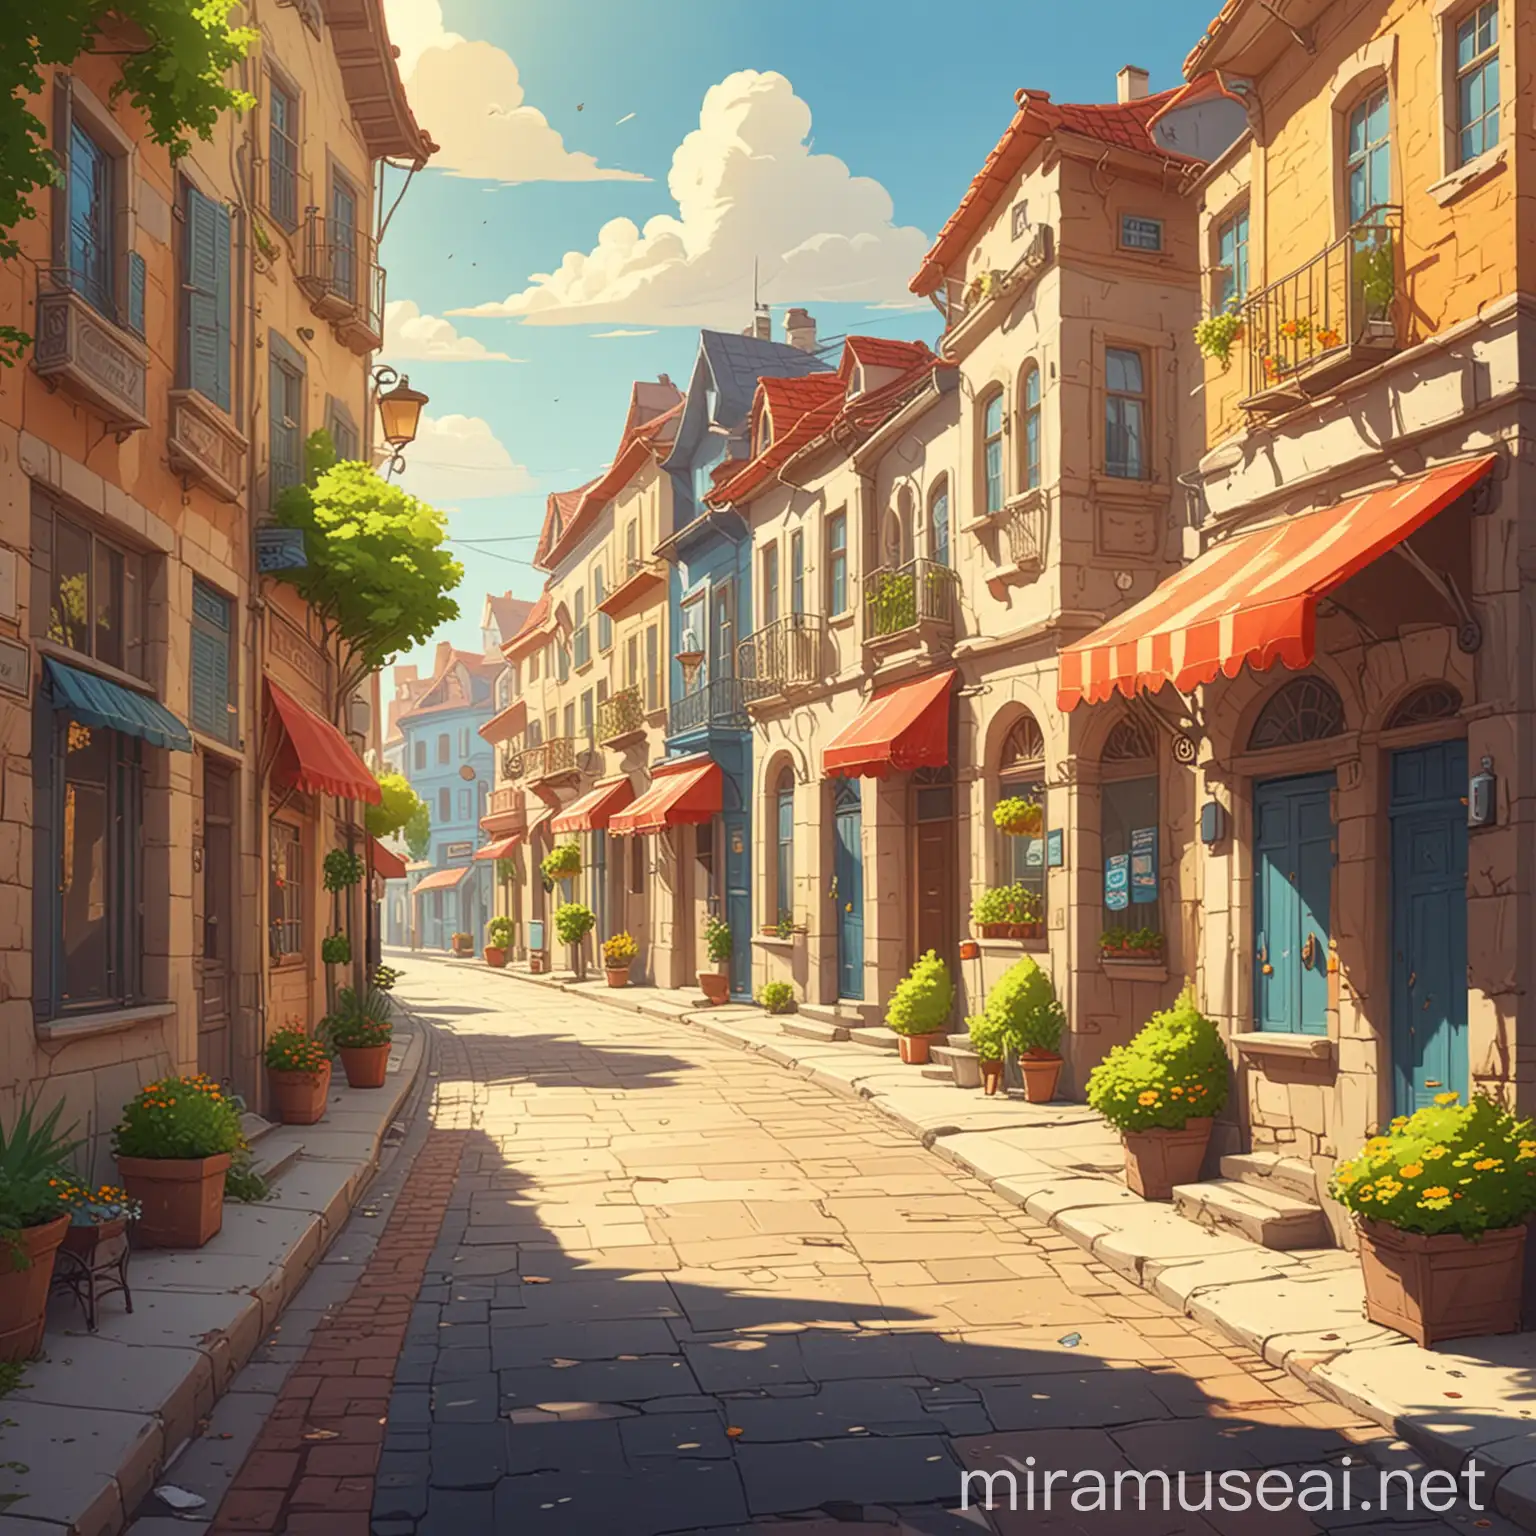 Vibrant Cartoon Street Scene on a Sunny Day